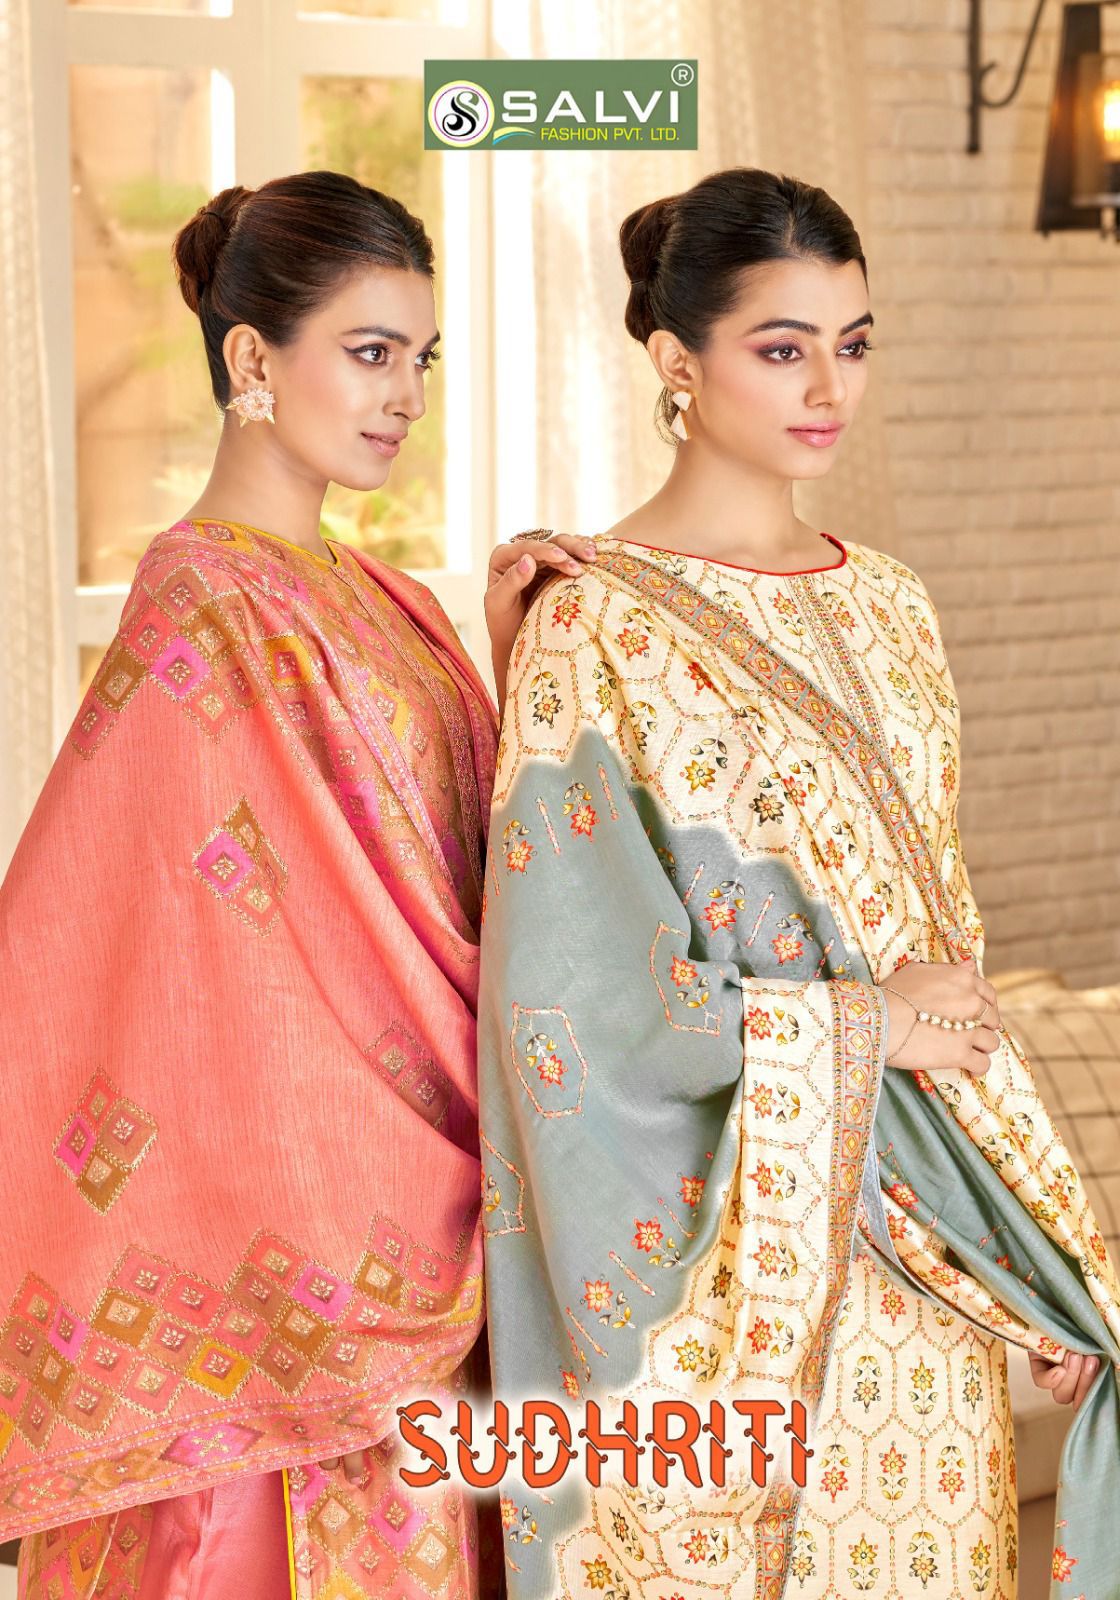 Salvi Fashion Sudhriti Pant Style Dress Material Catalog Lowest Price